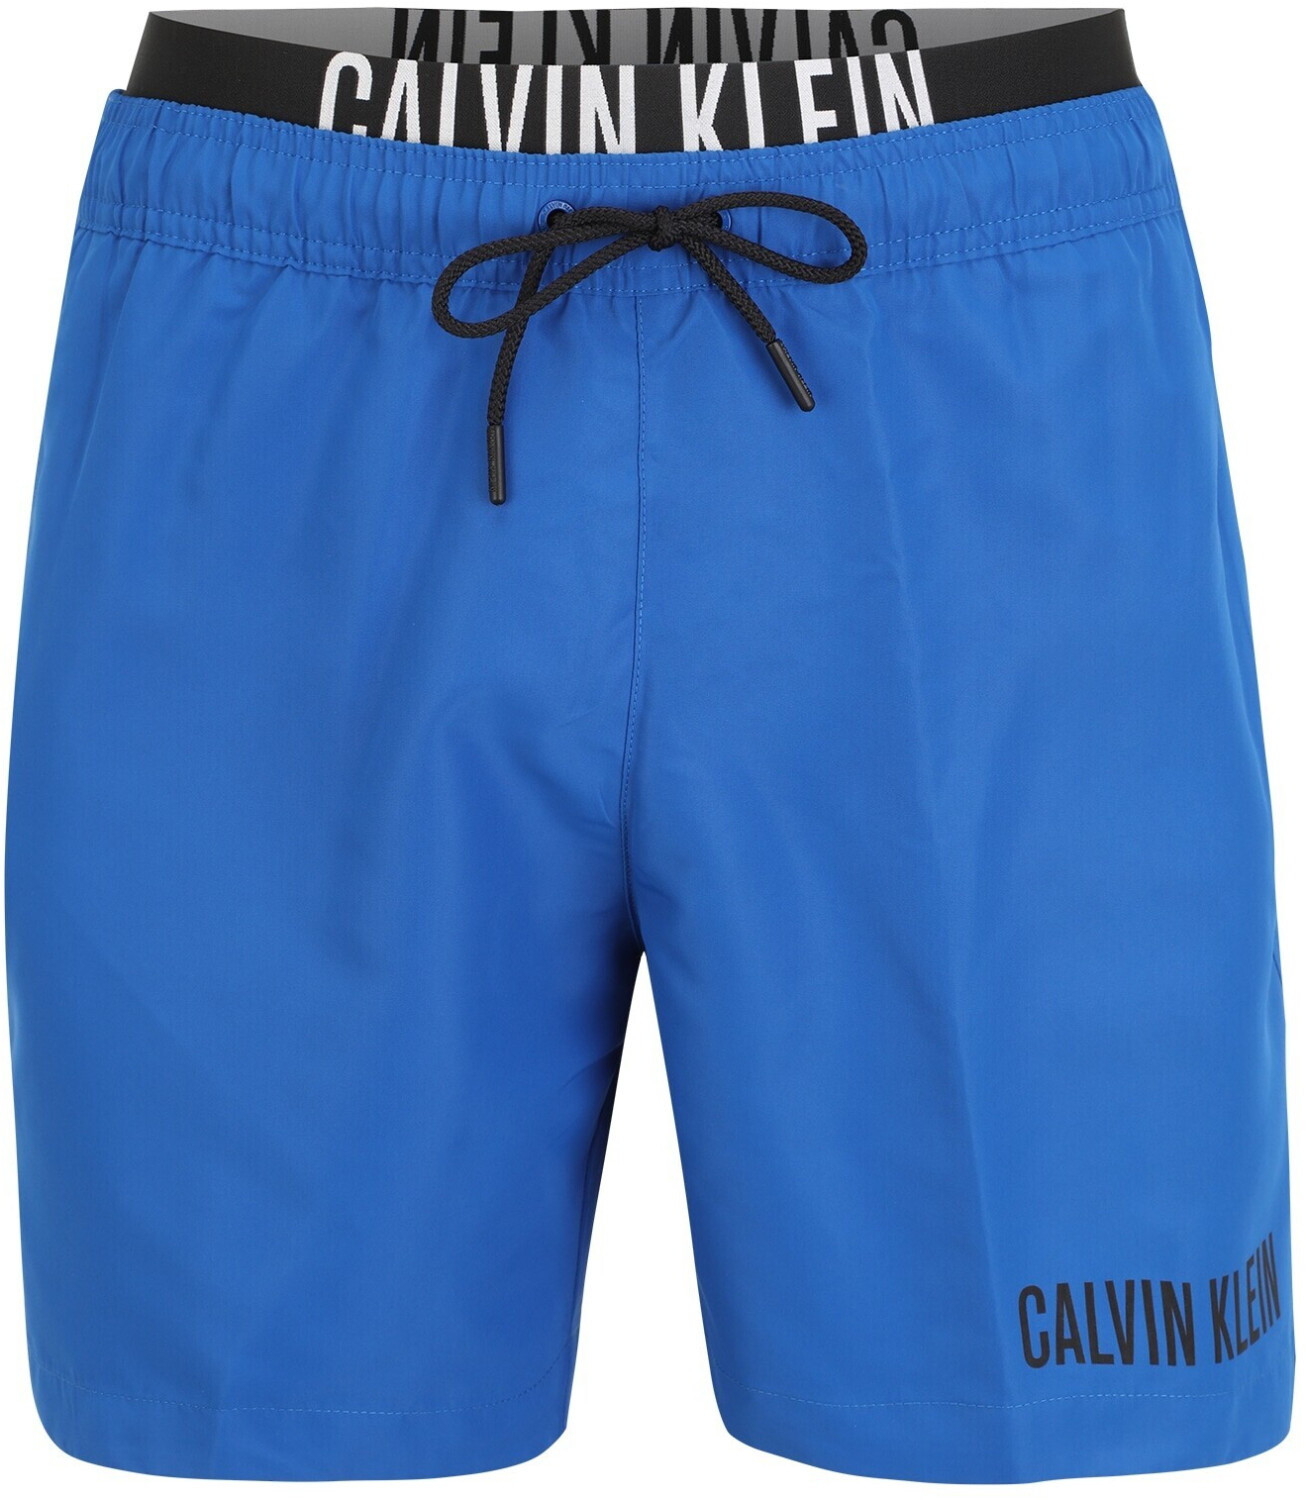 Calvin Klein】Swim Double Waistband メンズ水着海パン (Calvin Klein